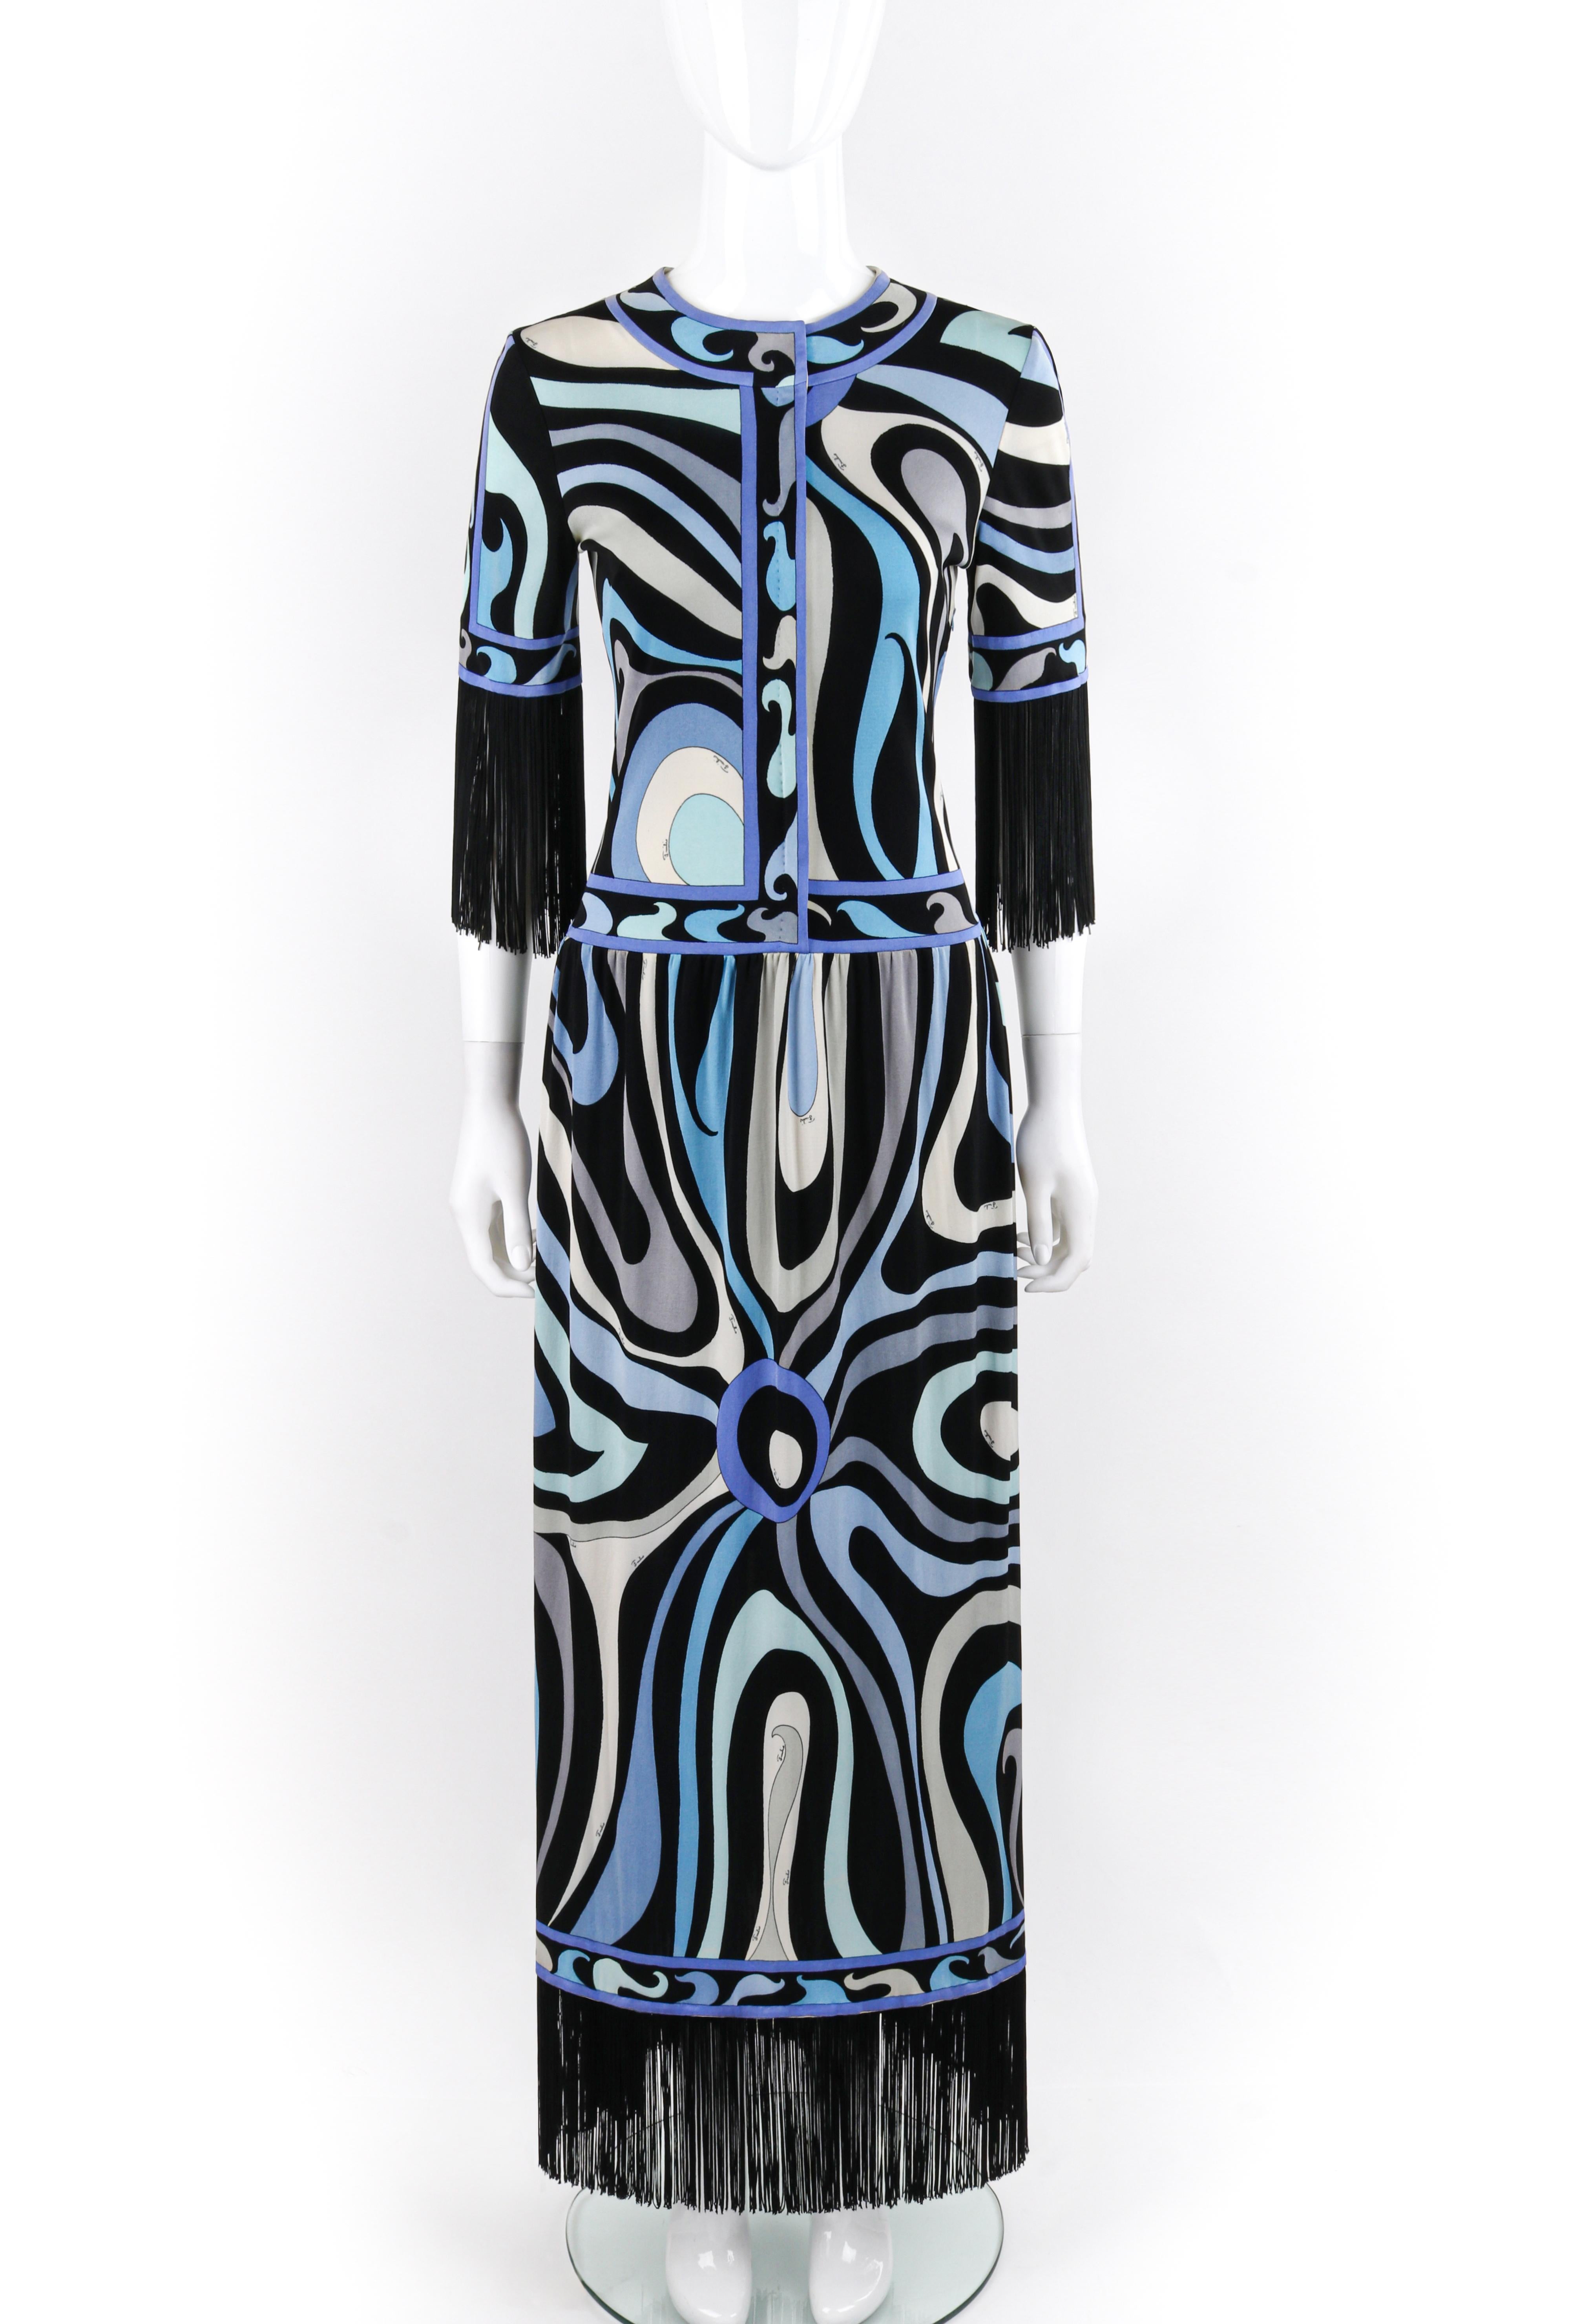 EMILIO PUCCI c.1960’s Blue Signature Op Art Fringe Drop Waist Silk Maxi Dress
Circa: 1960’s
Label(s): Emilio Pucci
Designer: Emilio Pucci
Style: Maxi dress
Color(s): Shades of blue, white, black, purple
Lined: No
Marked Fabric Content: “100% Pure